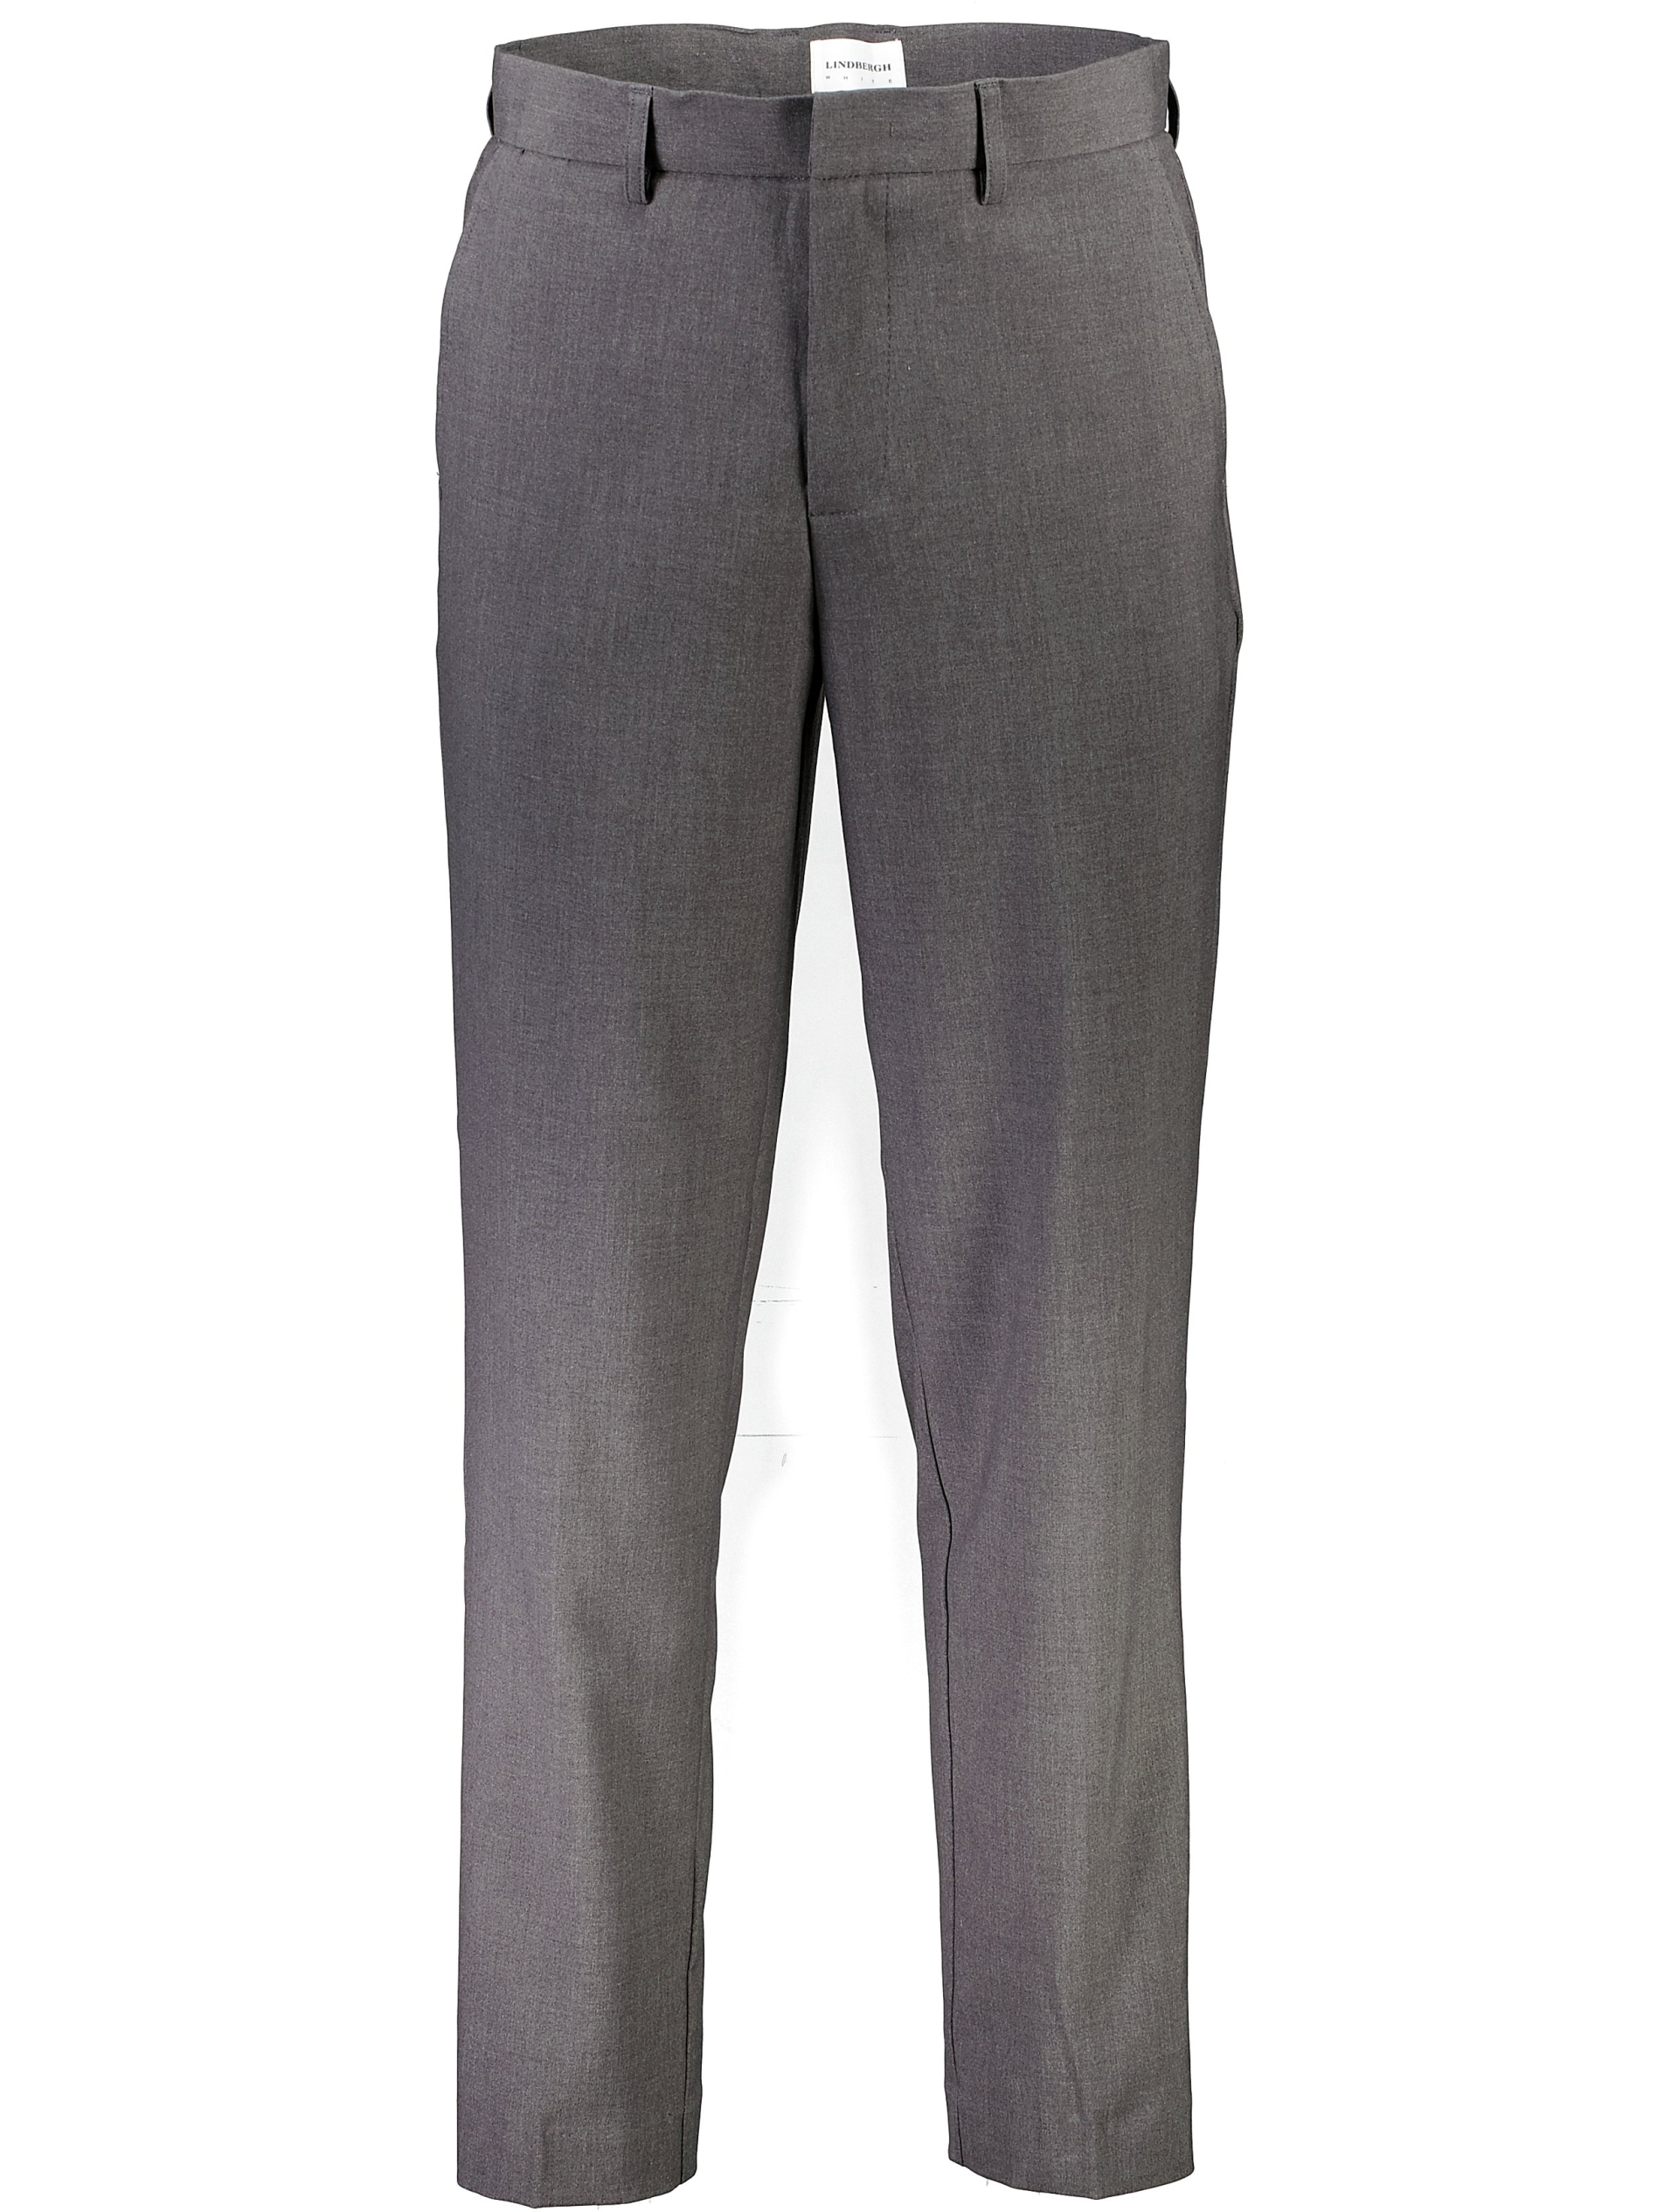 Lindbergh Classic trousers grey / grey mix